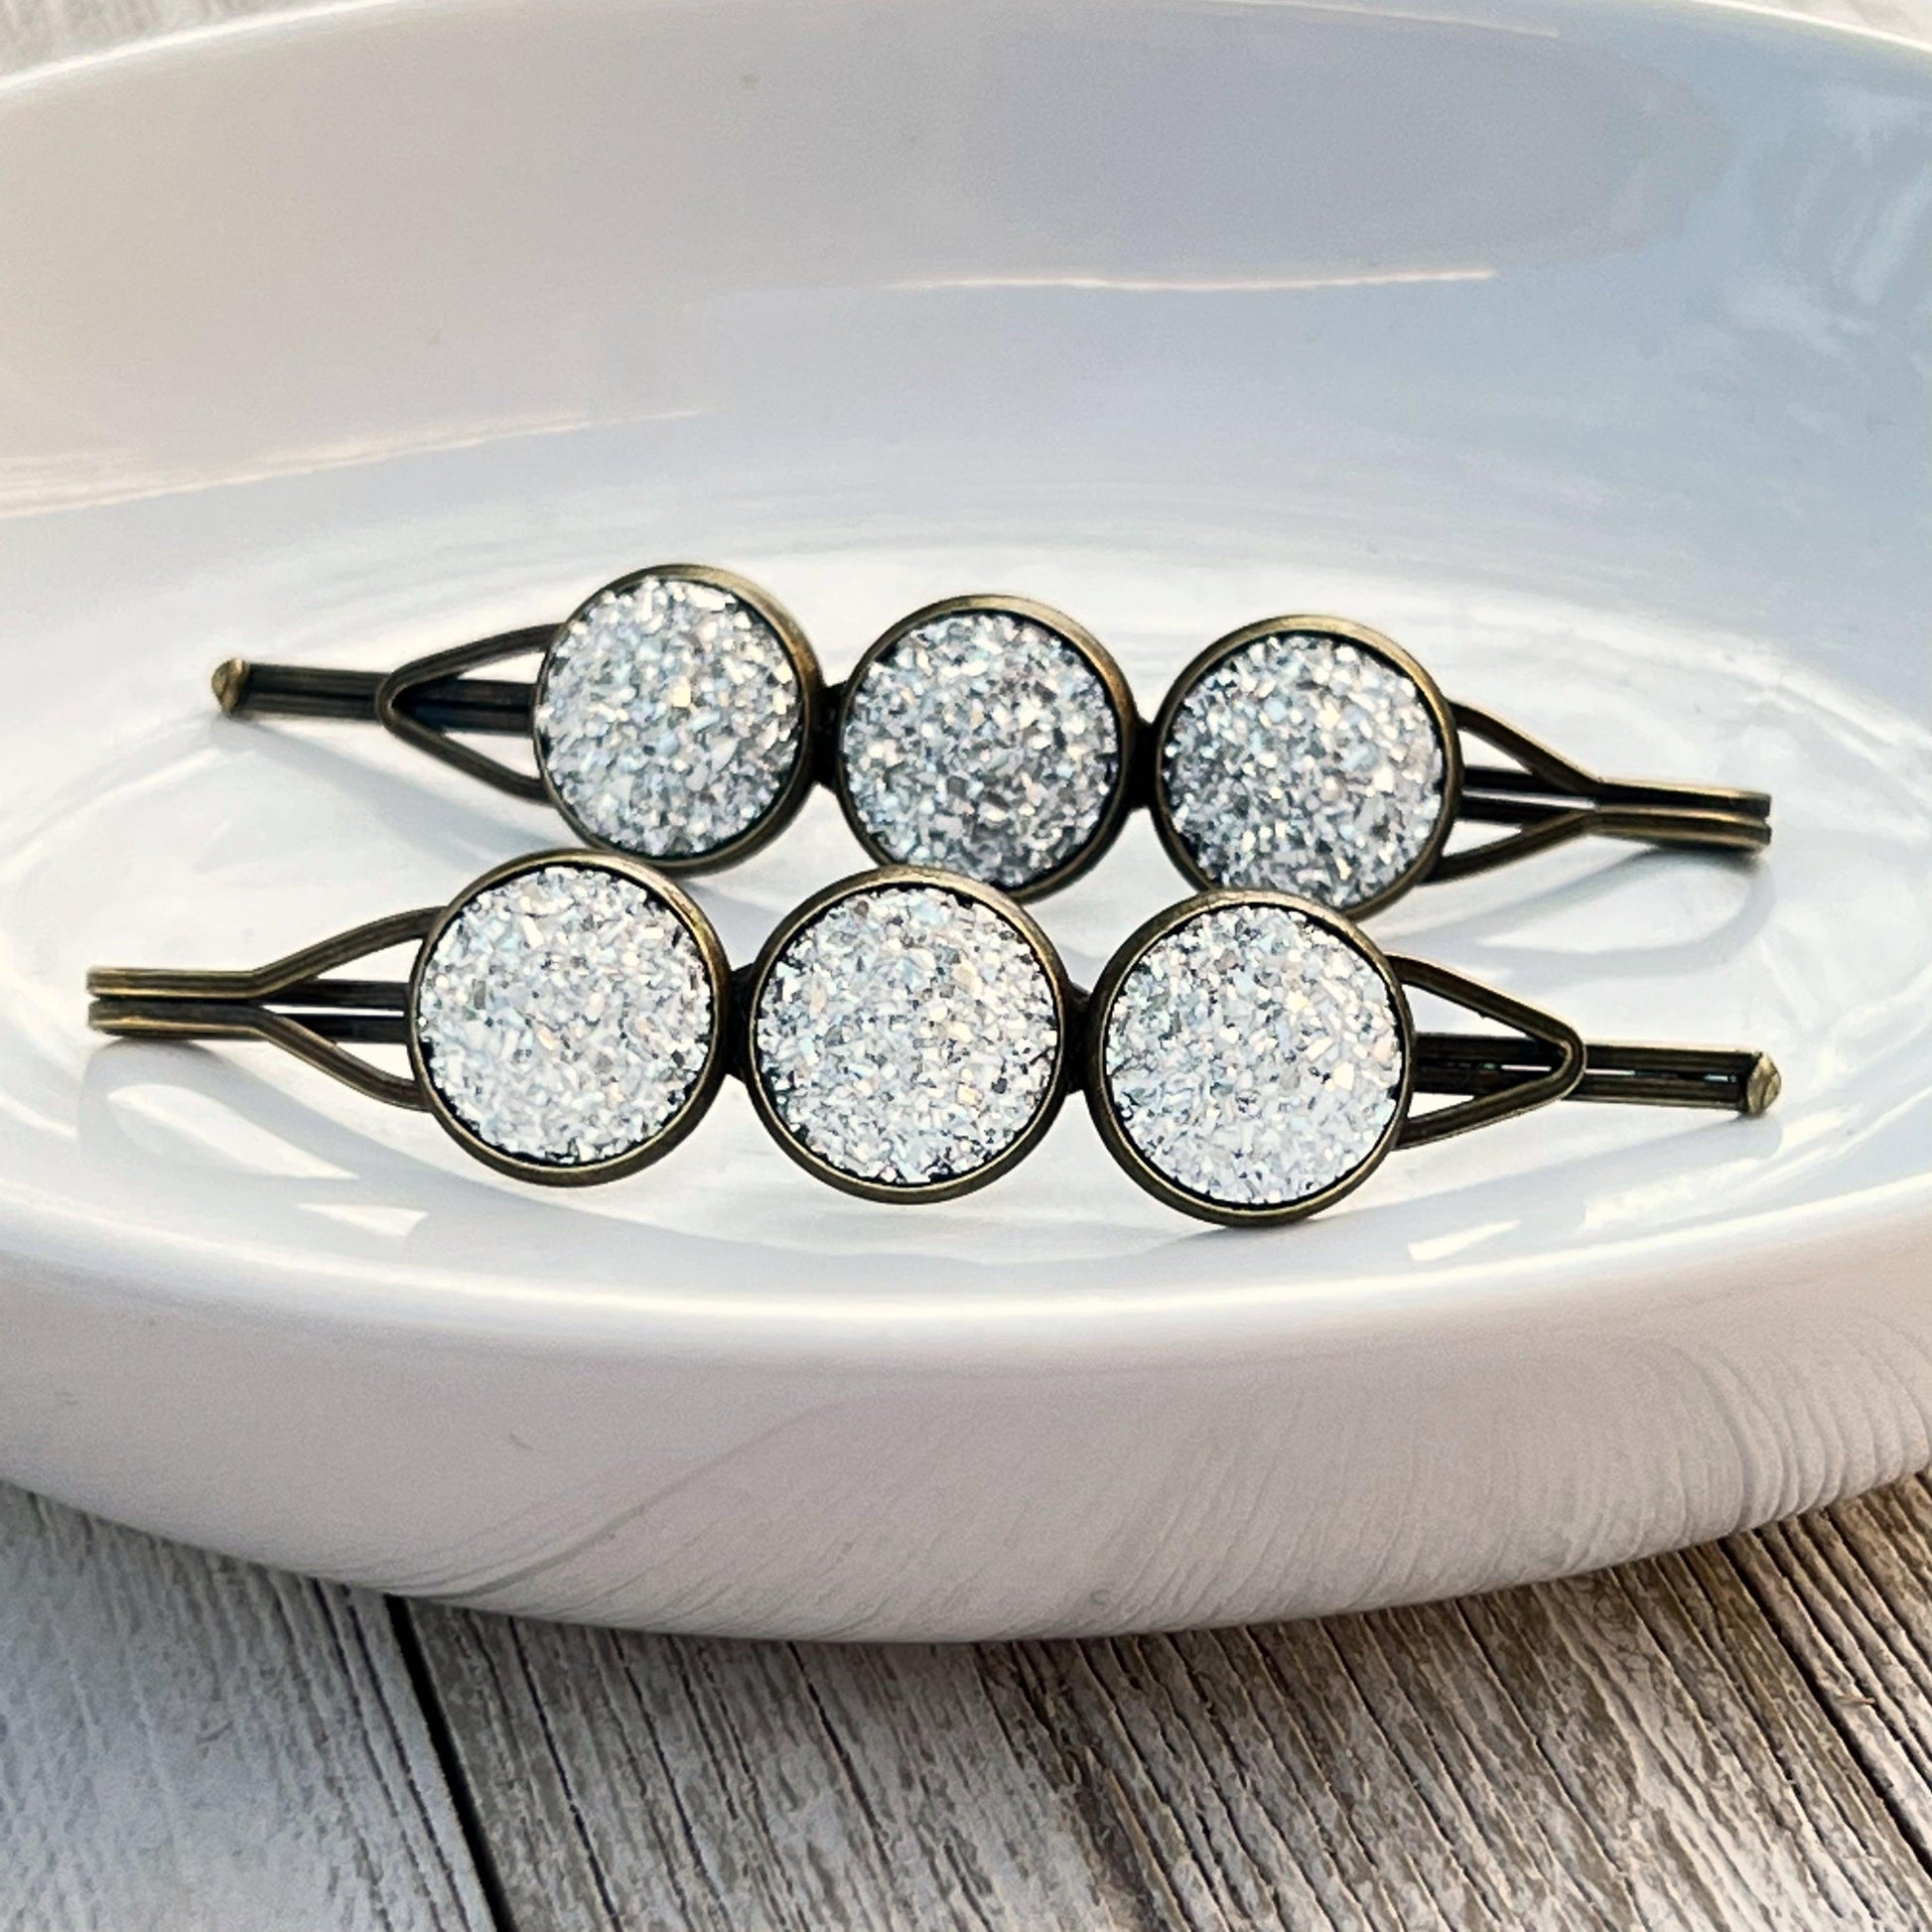 Metallic Silver Druzy Brass Hair Pins - Stylish & Elegant Hair Accessories